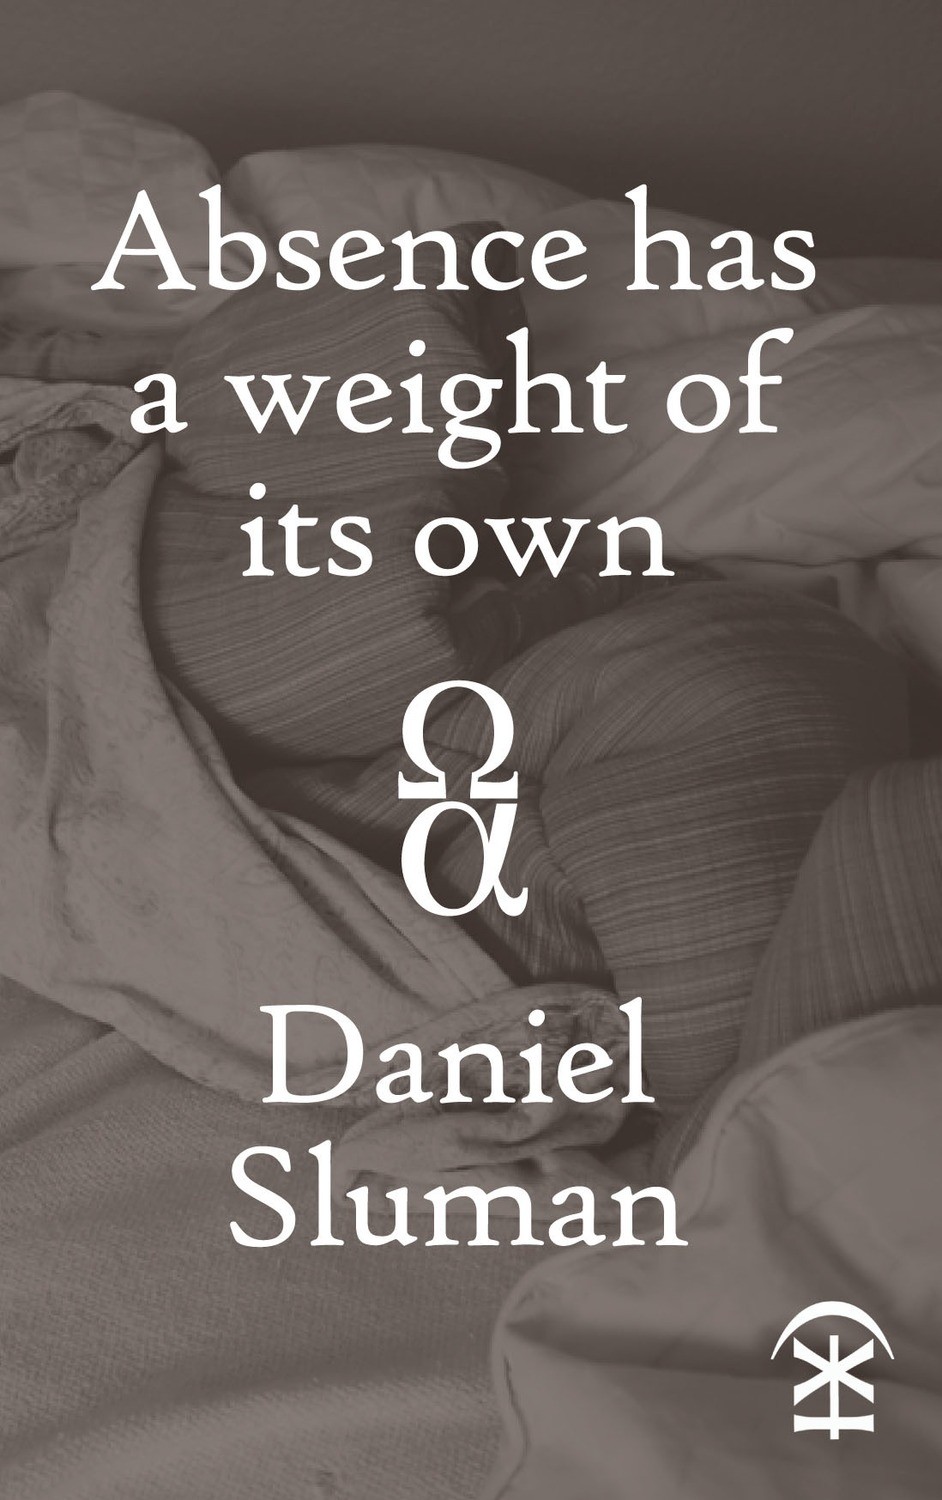 Absence has a weight of its own - Daniel Sluman